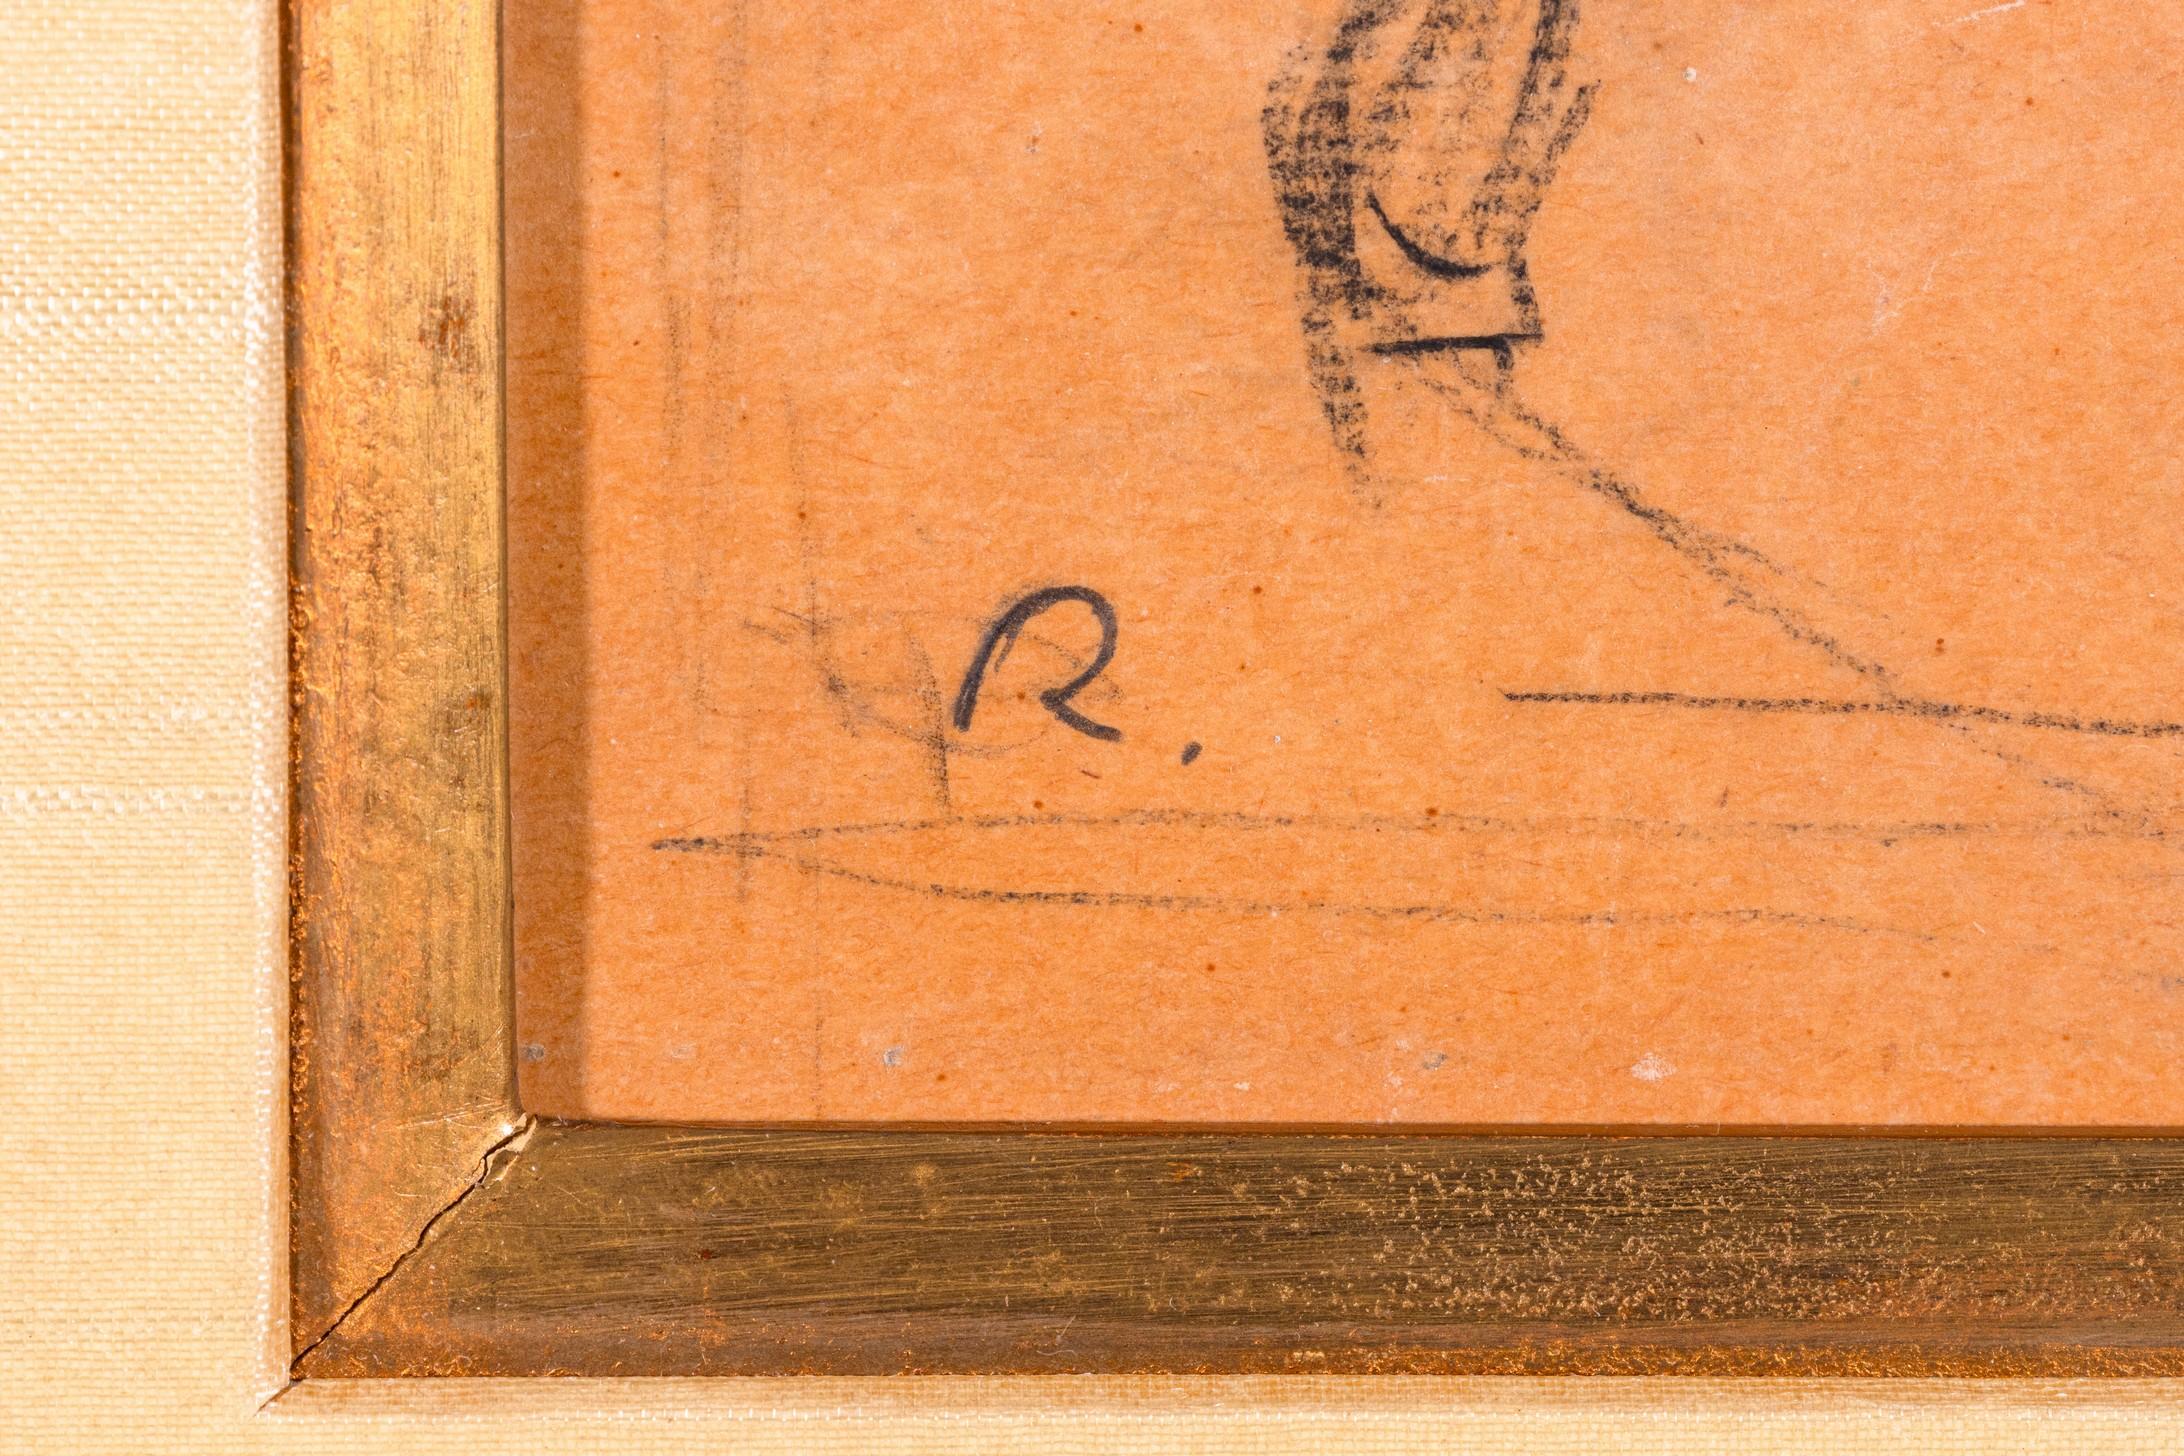 Pierre-Auguste Renoir Madame de Galéa Signed Original Sketch Graphite on Paper For Sale 2